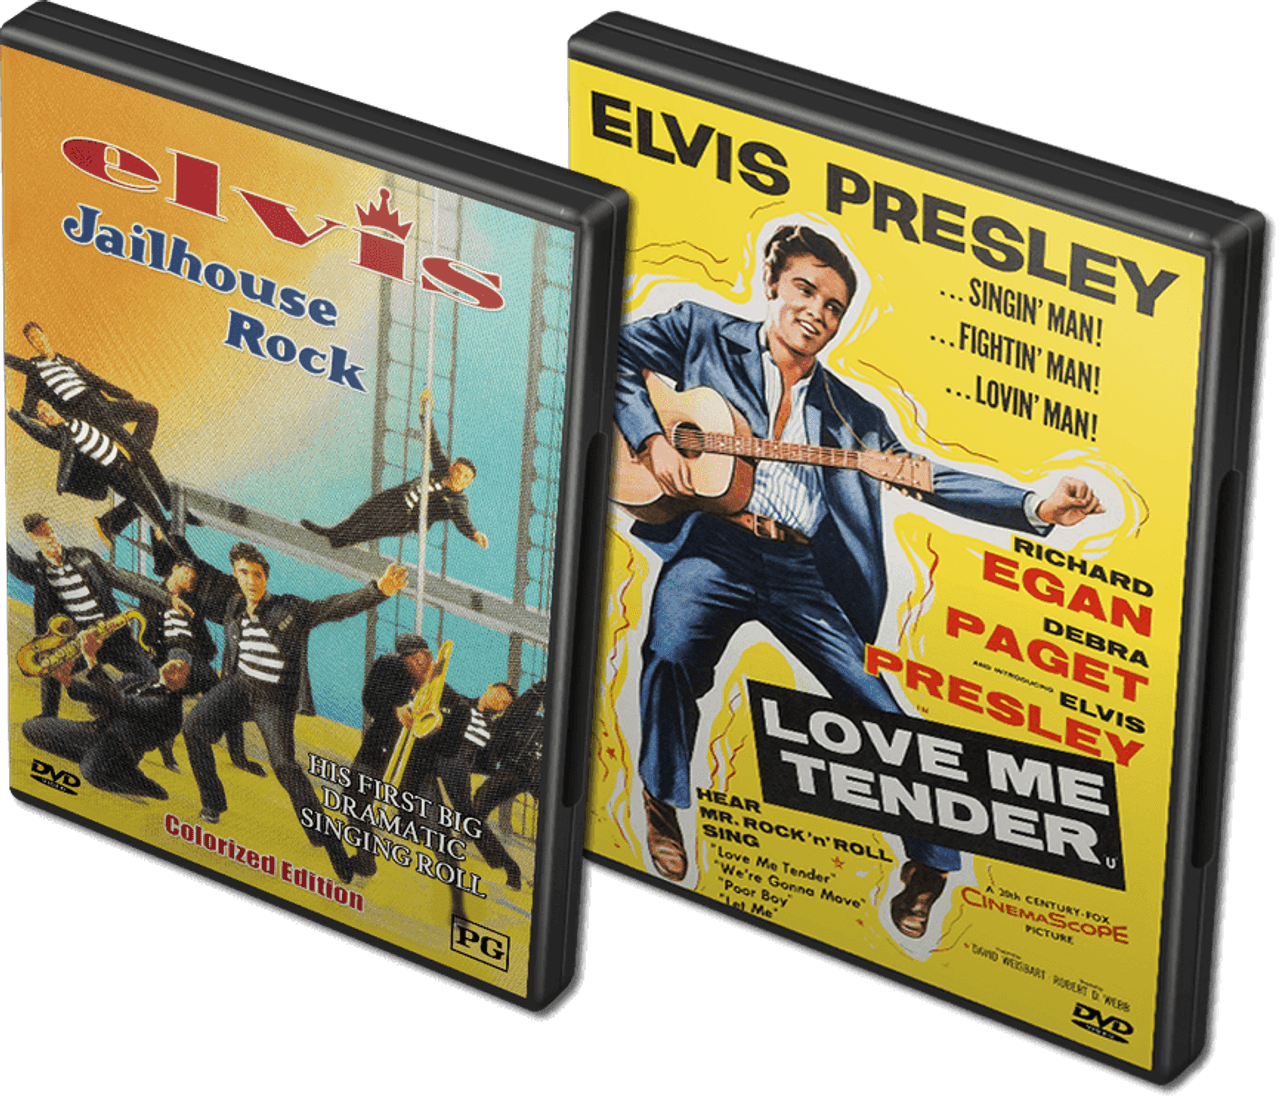 Edition　Jailhouse　Colorized　Tender　Me　Rock　Love　and　Elvis:　Presley)　DVDs　(Elvis